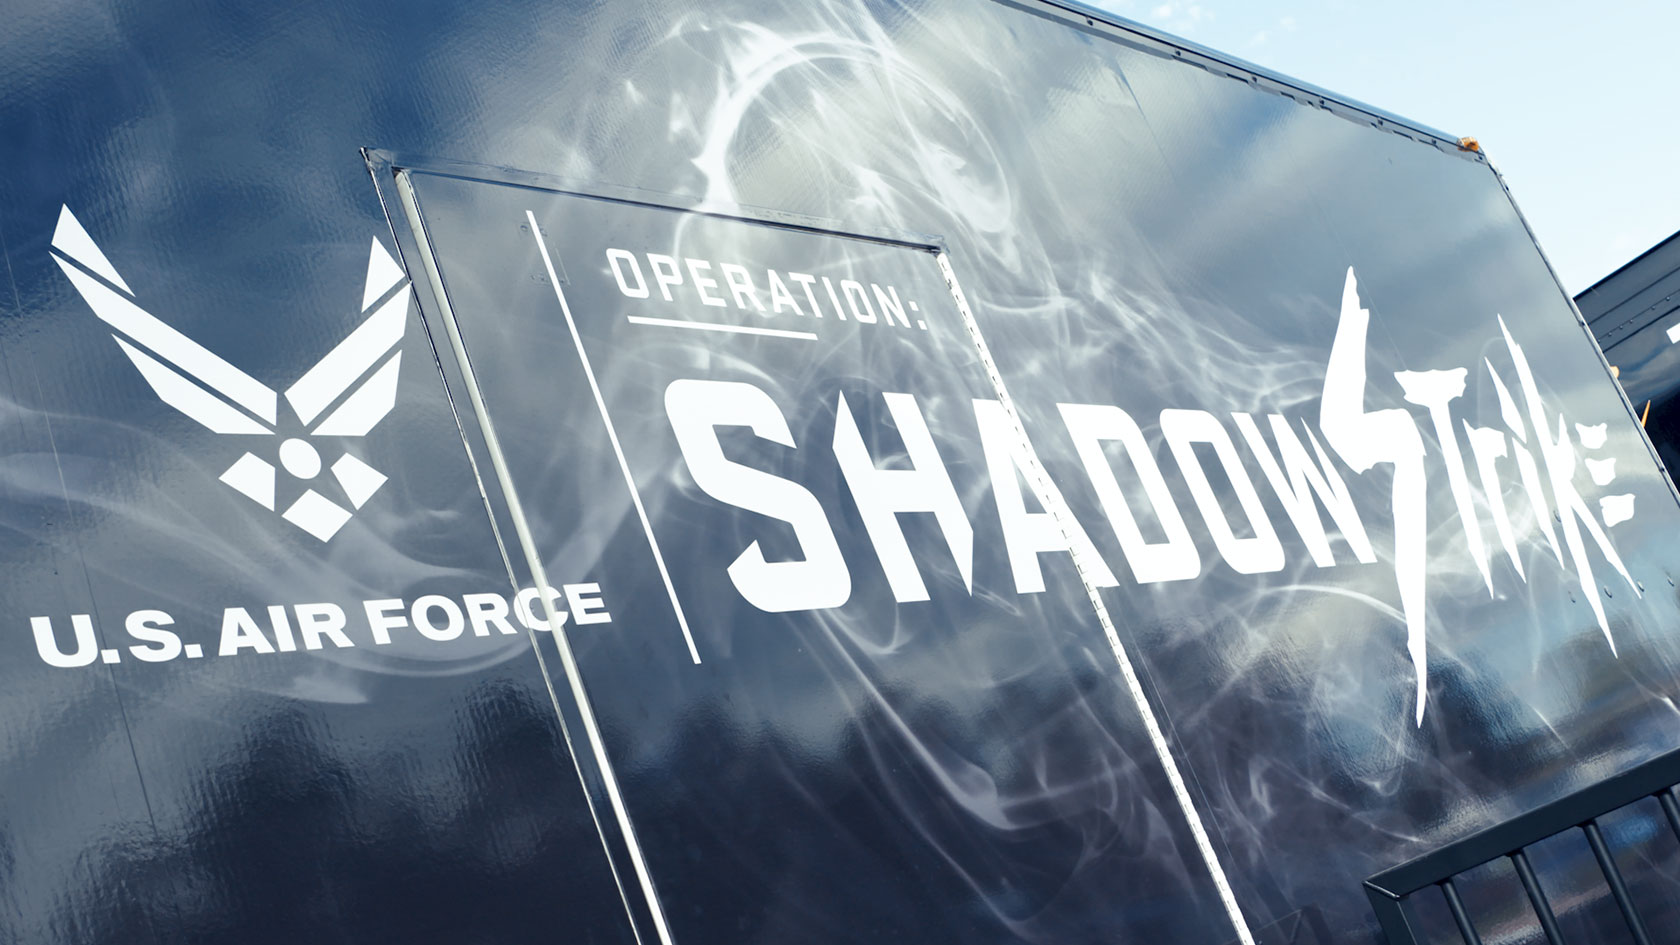 Shadow Strike experiential tour